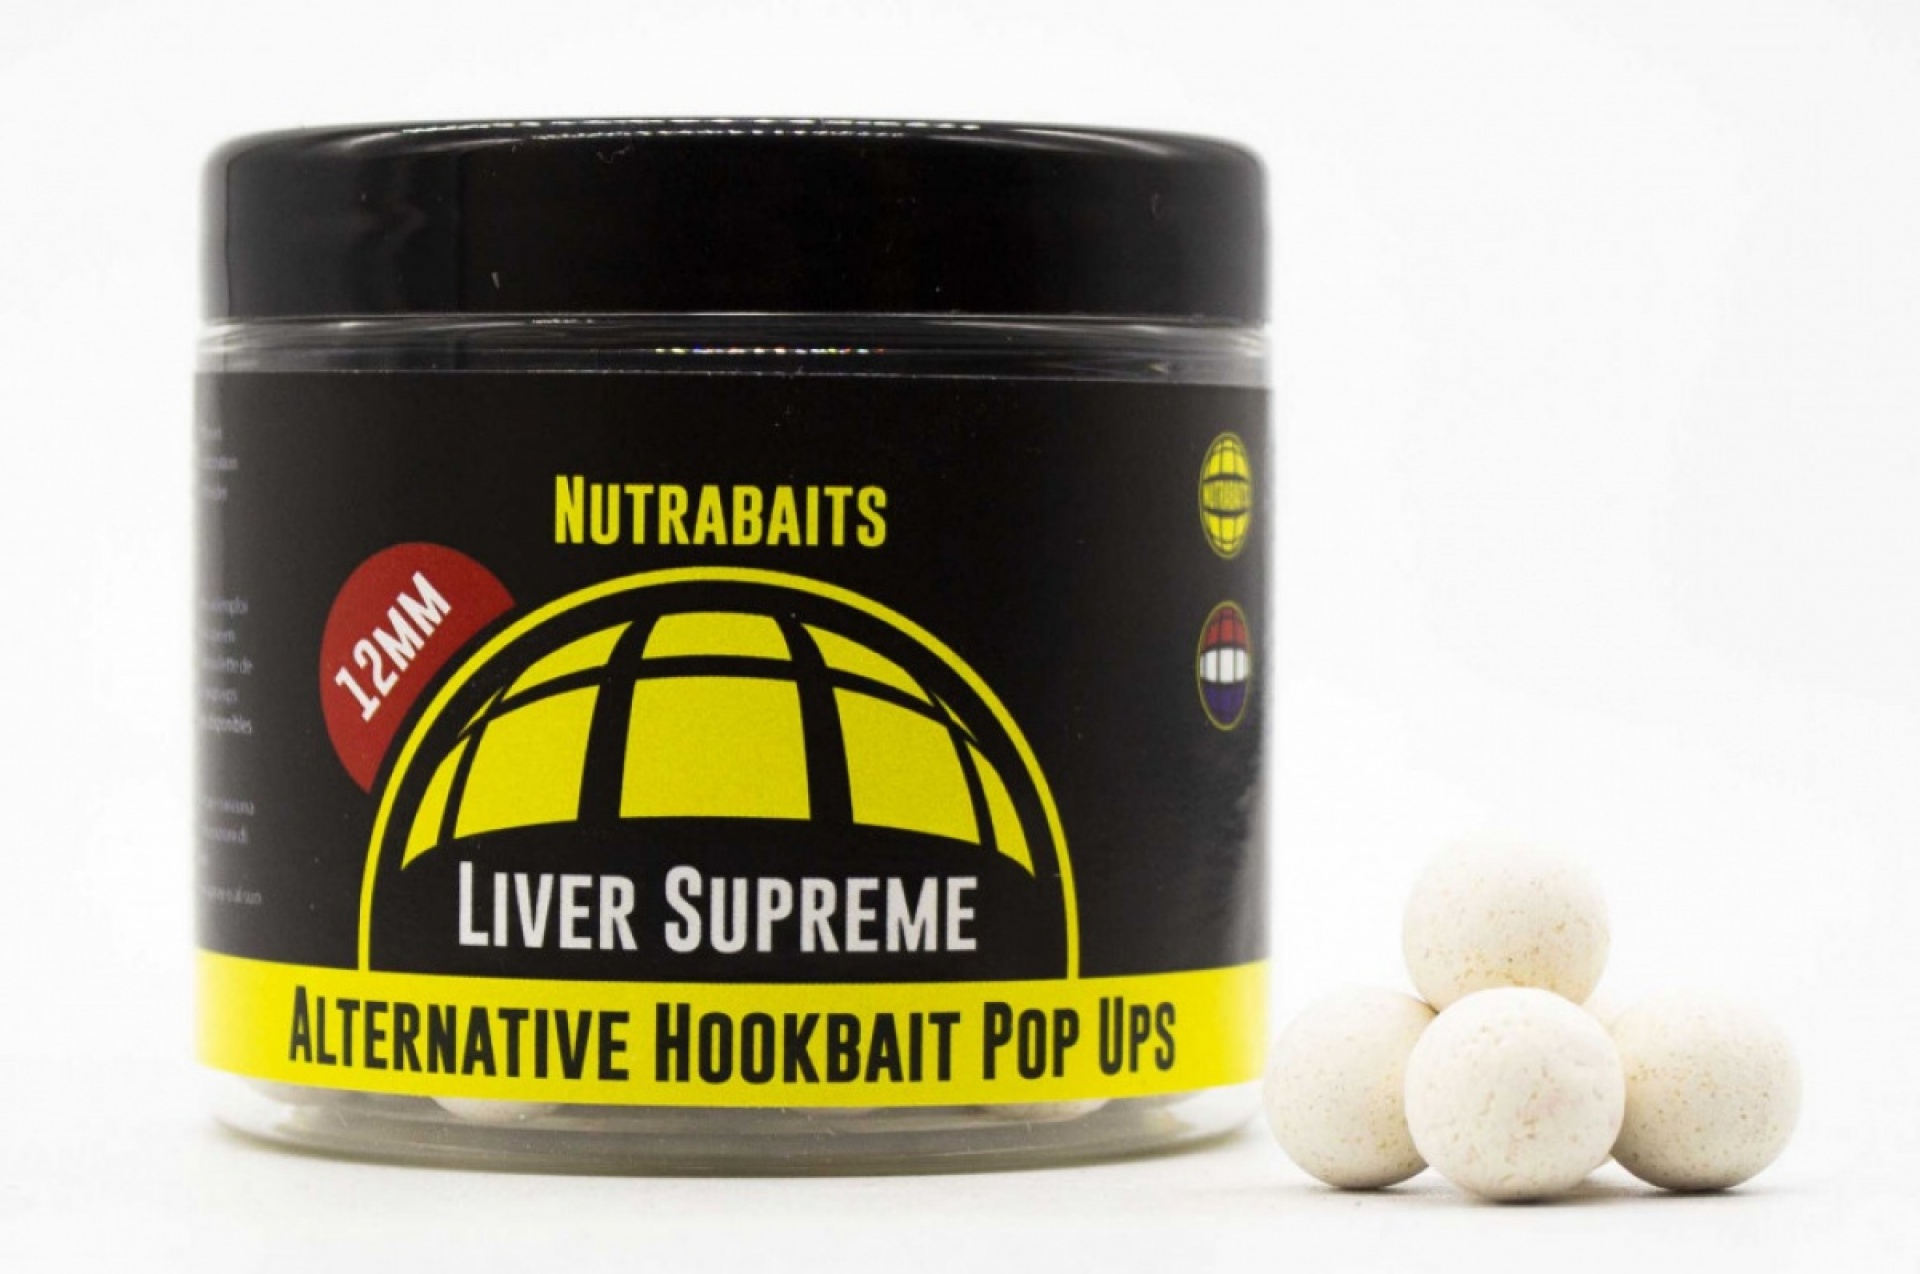 Nutrabaits Liver Supreme Alternative Hookbait Pop-Ups